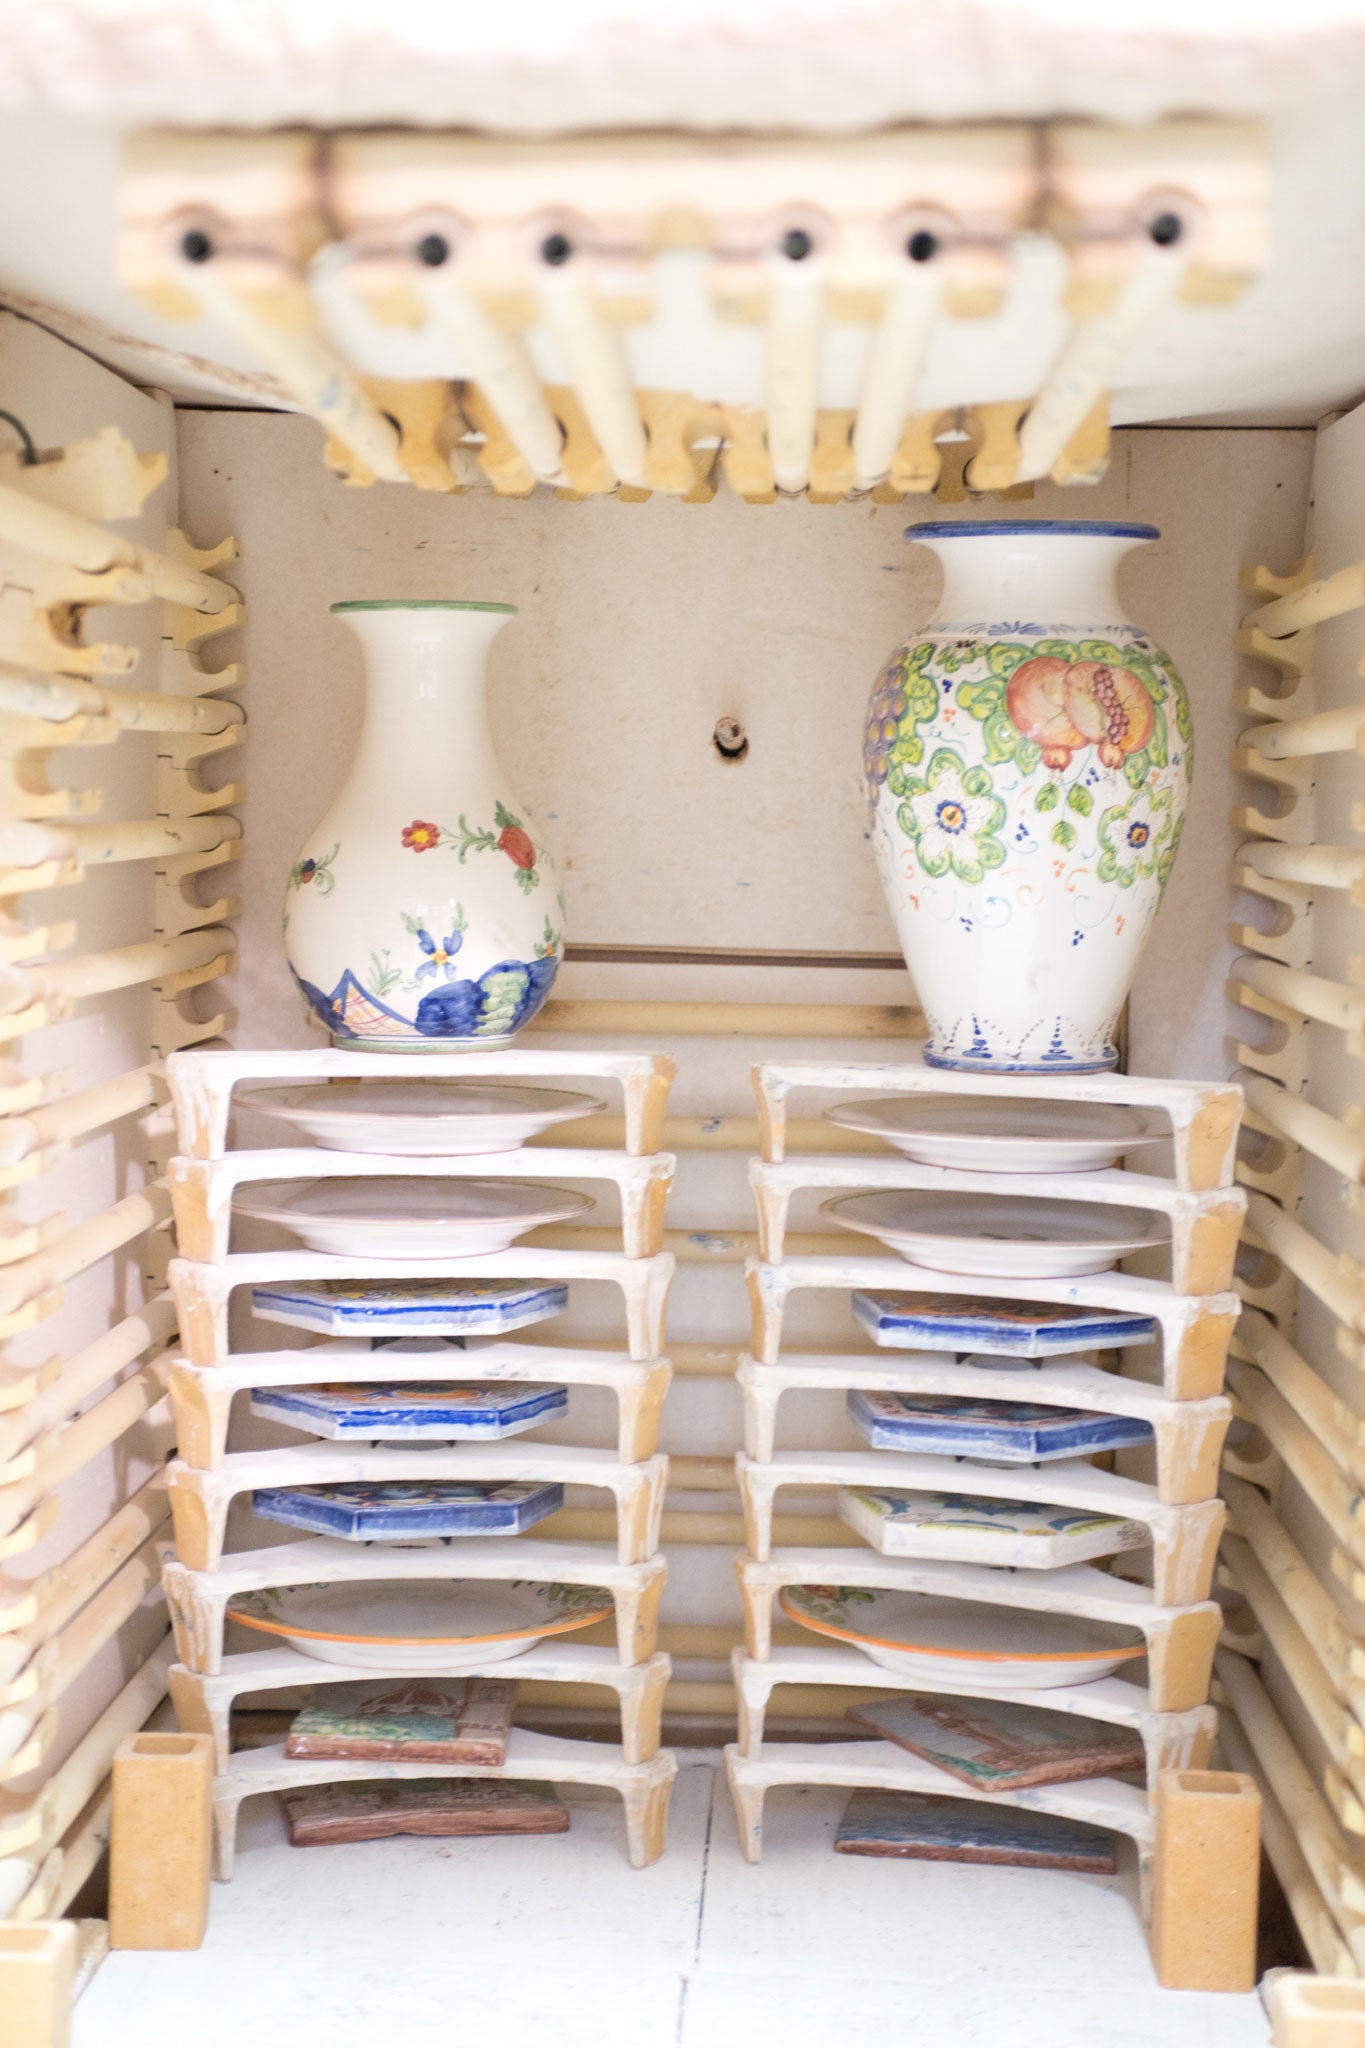 SBIGOLI-ARTISAN-CERAMICS-BOTTEGA-oven-dishes-vases-plates-kiln